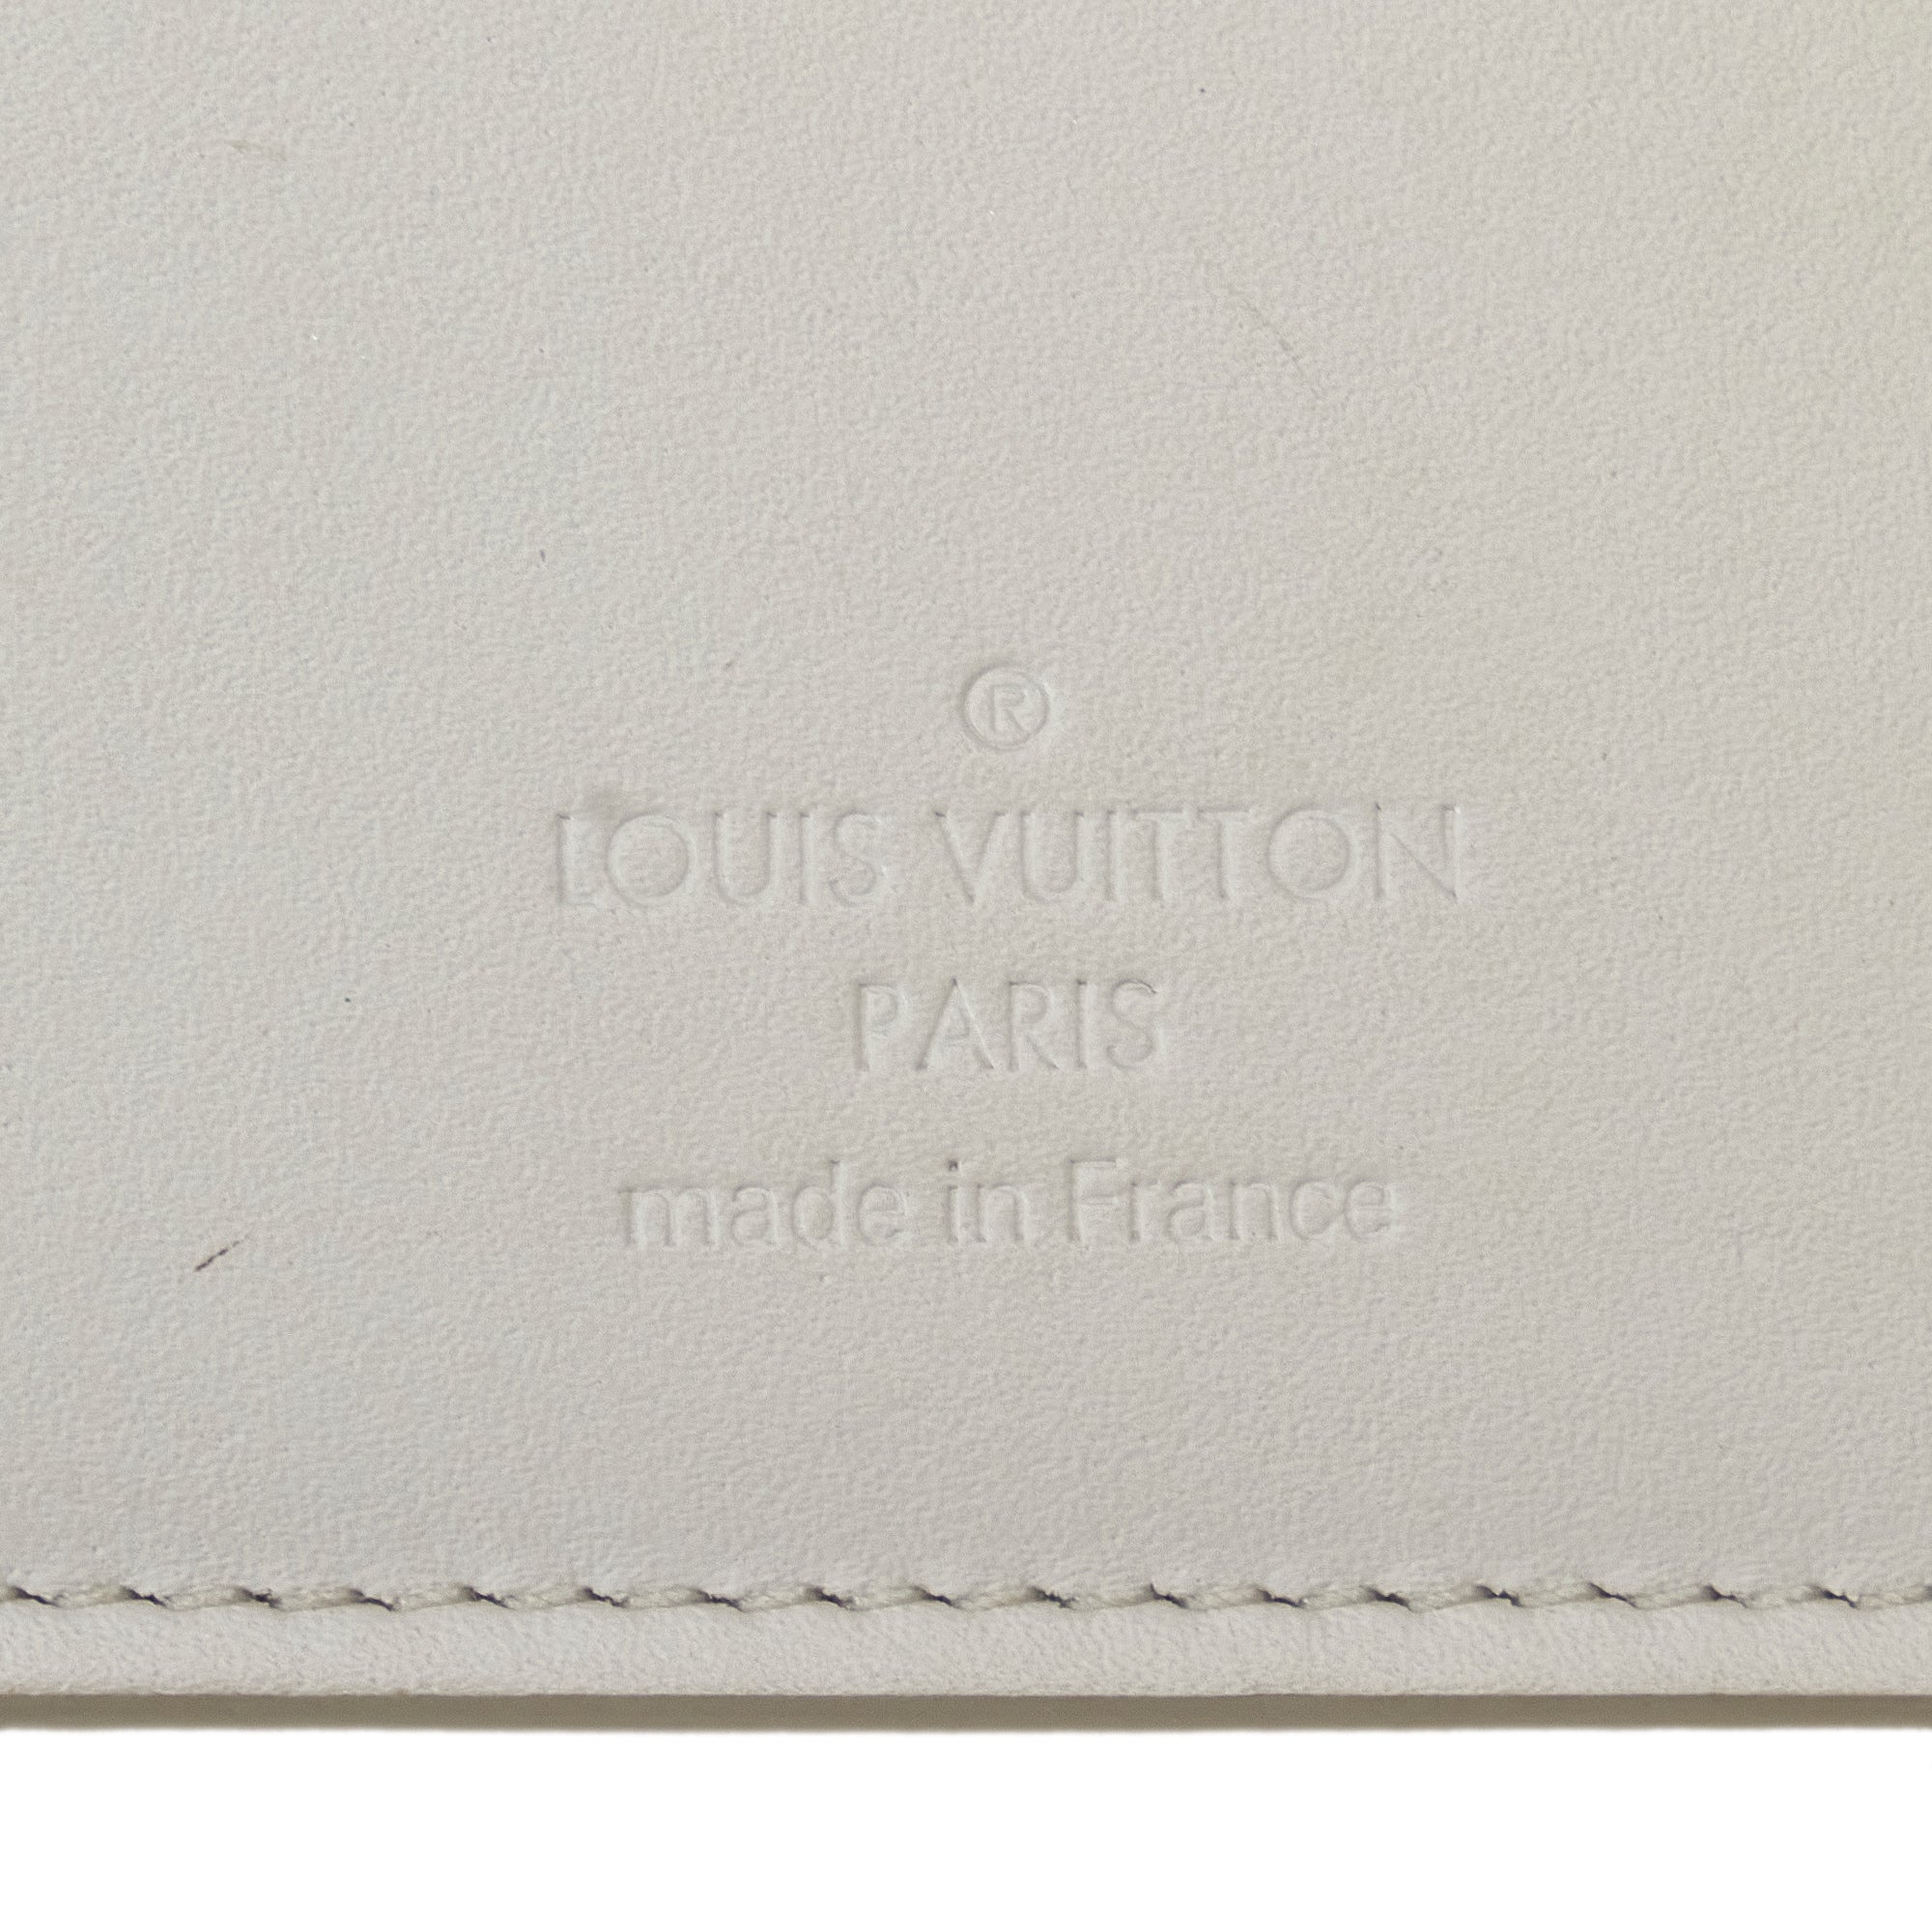 100% GENUINE Louis Vuitton Infini Brazza Wallet - jewelry - by